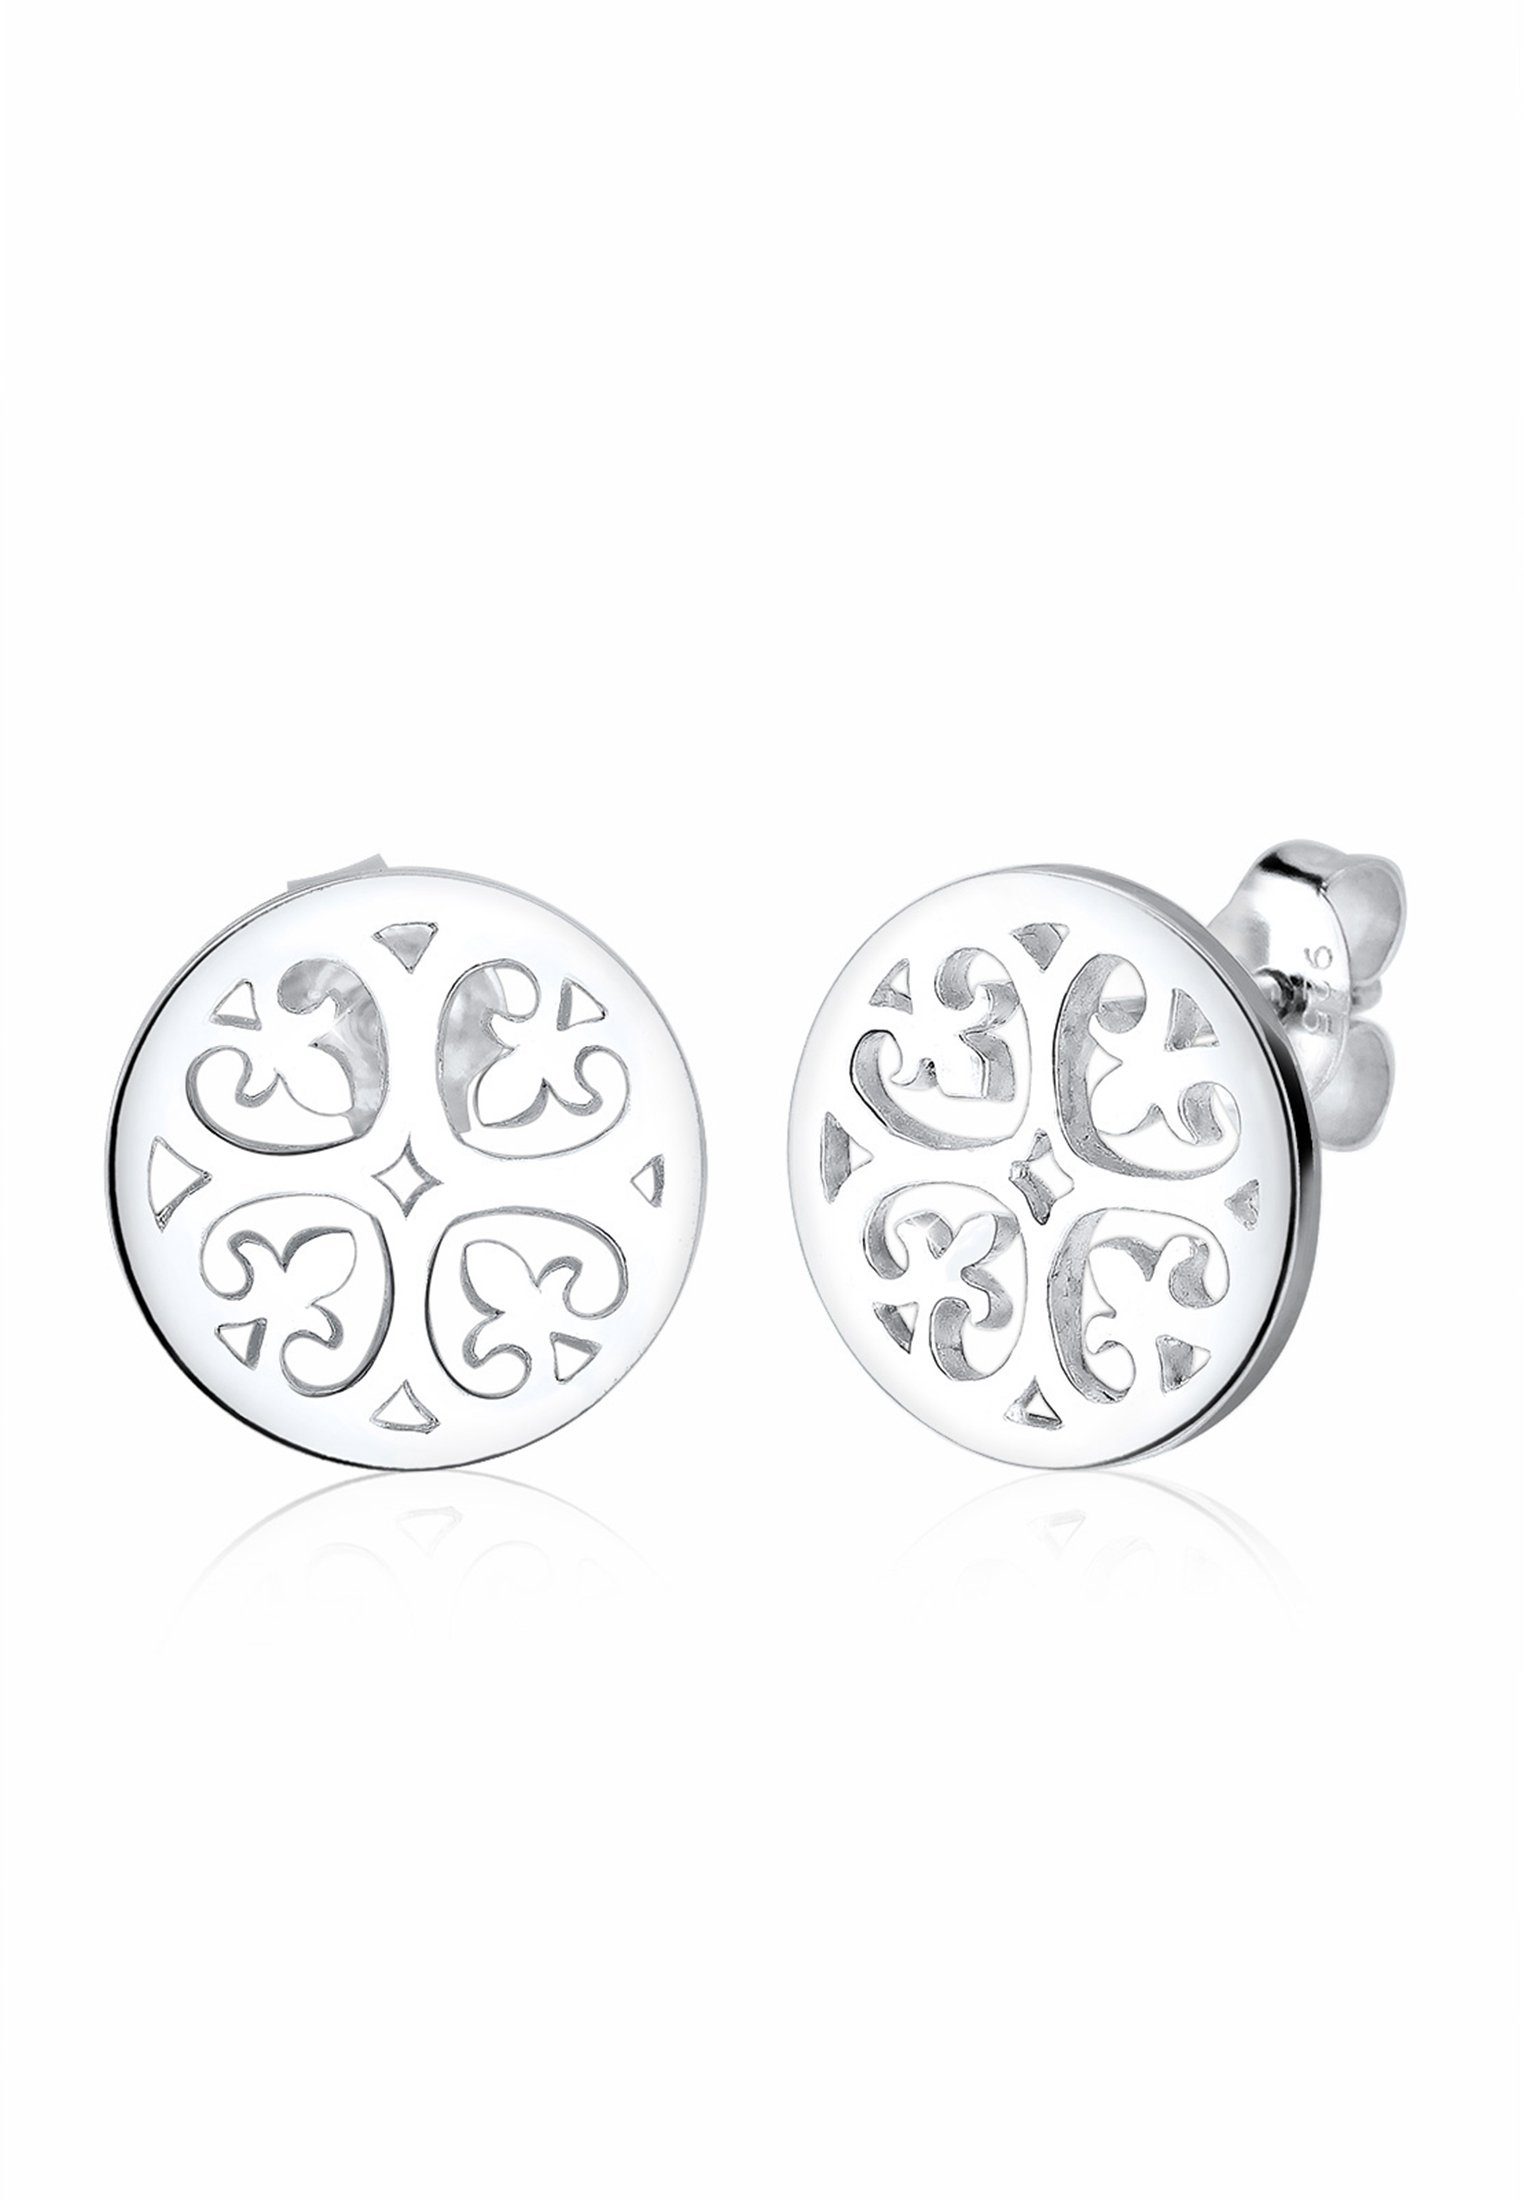 Elli Paar Ohrstecker Ornament hochglanzpoliert Ornament, Silber, 925 Orientalisch anlaufgeschützt Schmuckstück Filigran und